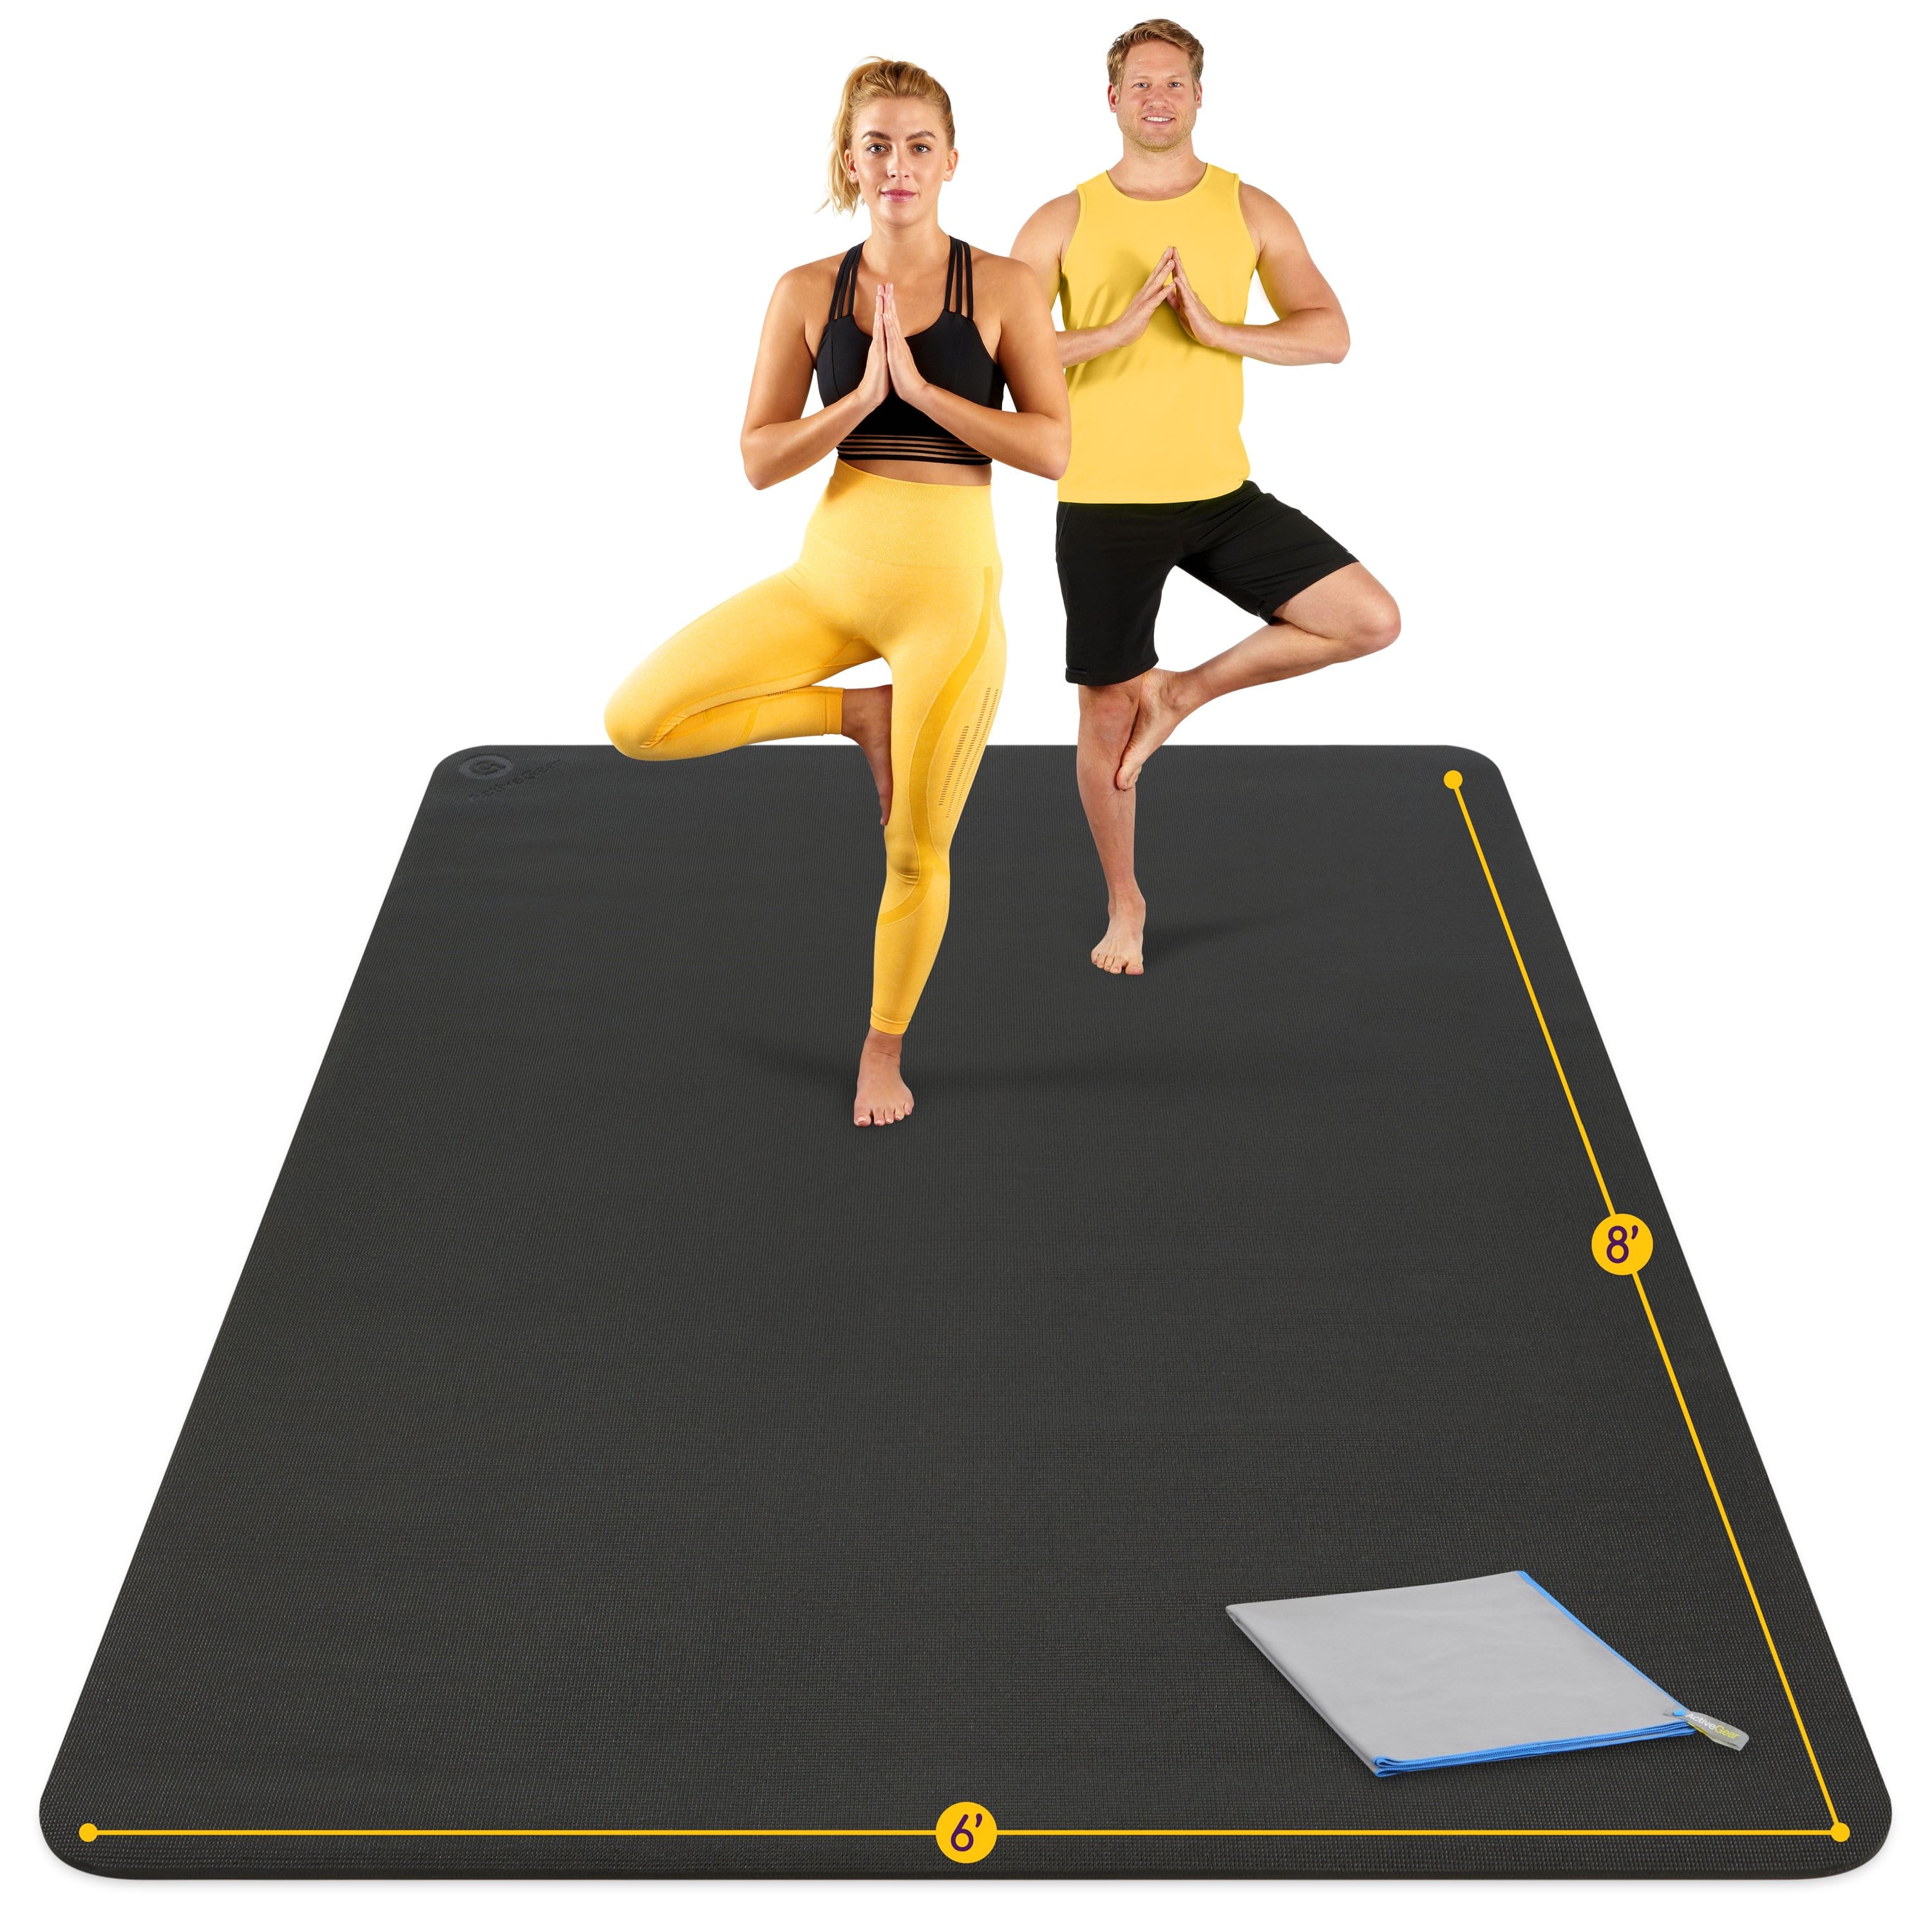 ActiveGear Large Yoga Mat 6 x 6 ft - 8mm Extra India